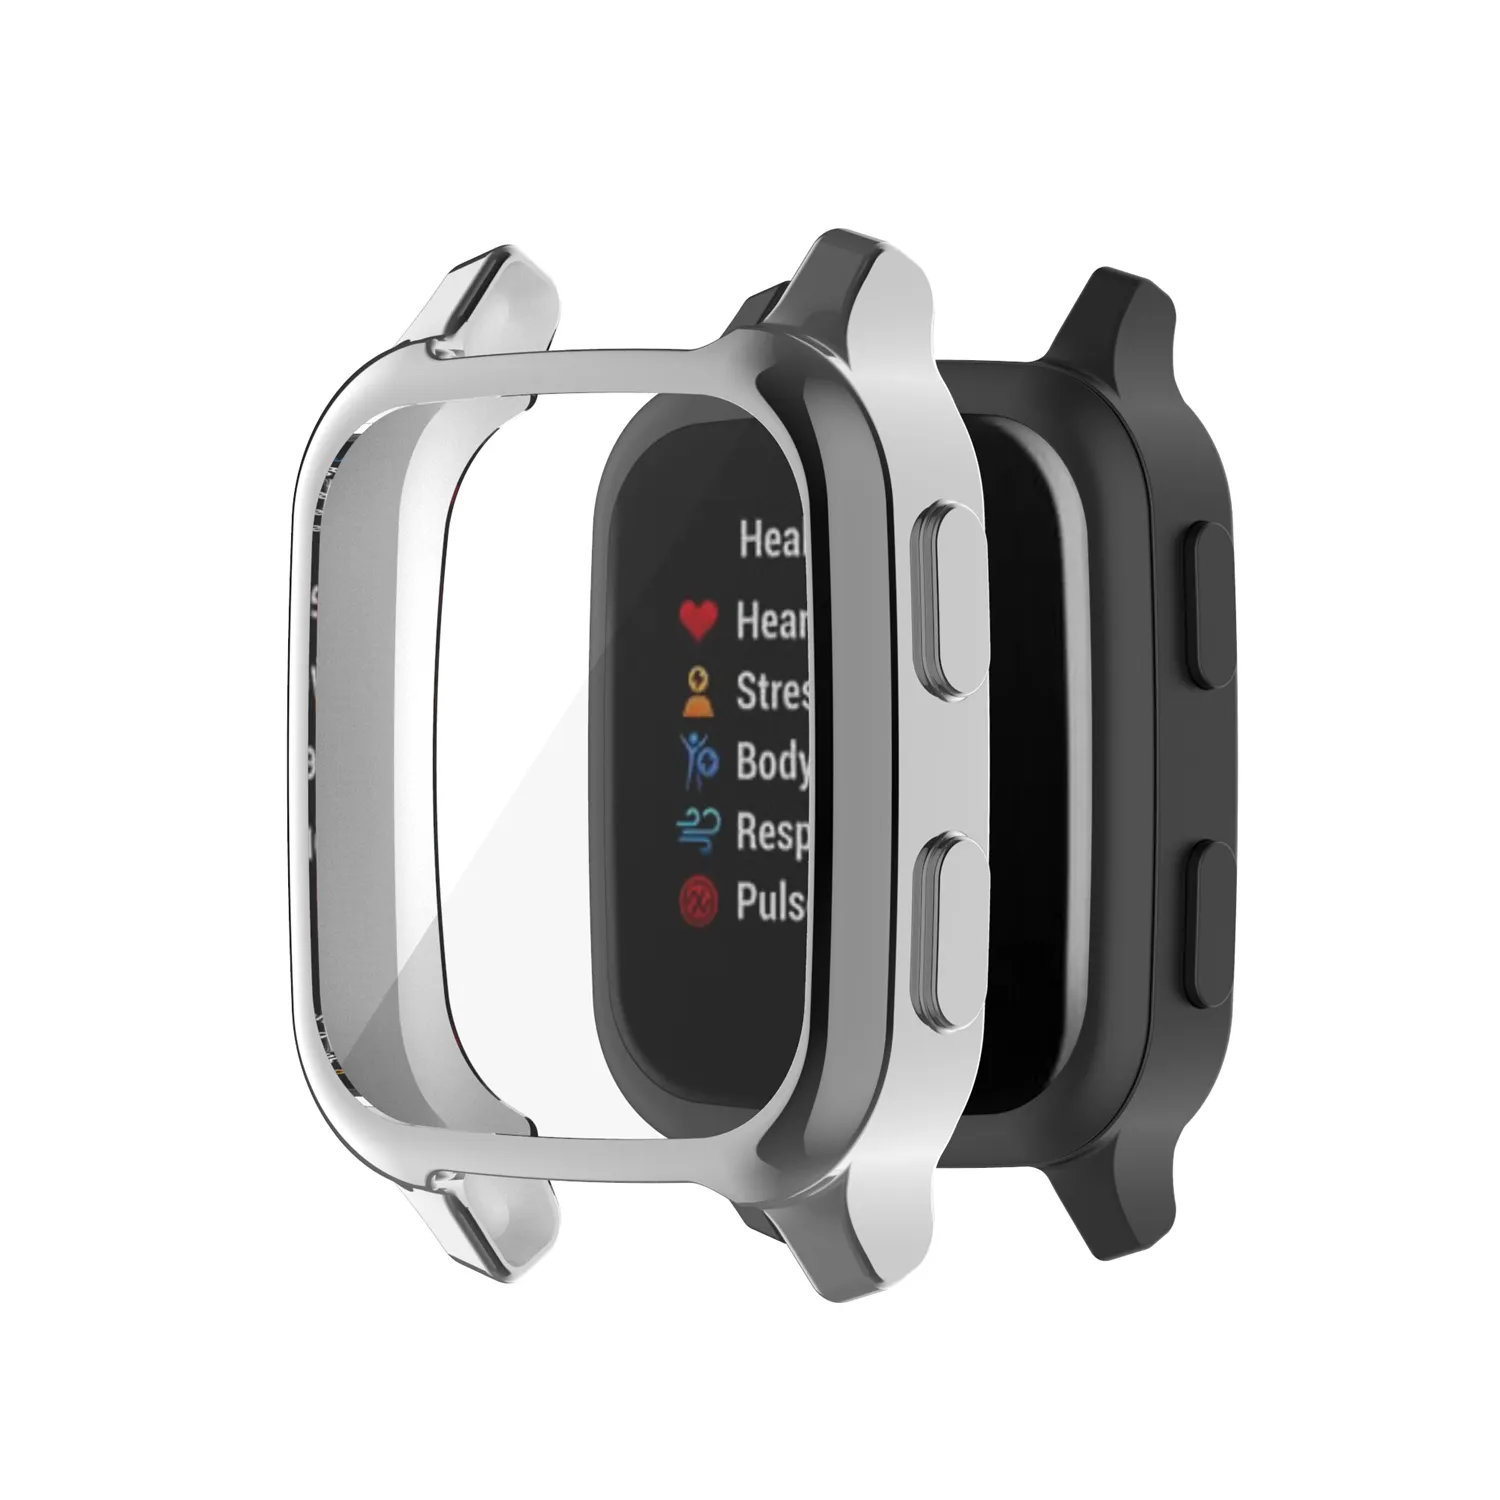 Capa protetora para smartwatch garmin, capa protetora, anti-impacto, leve, para venu e sq